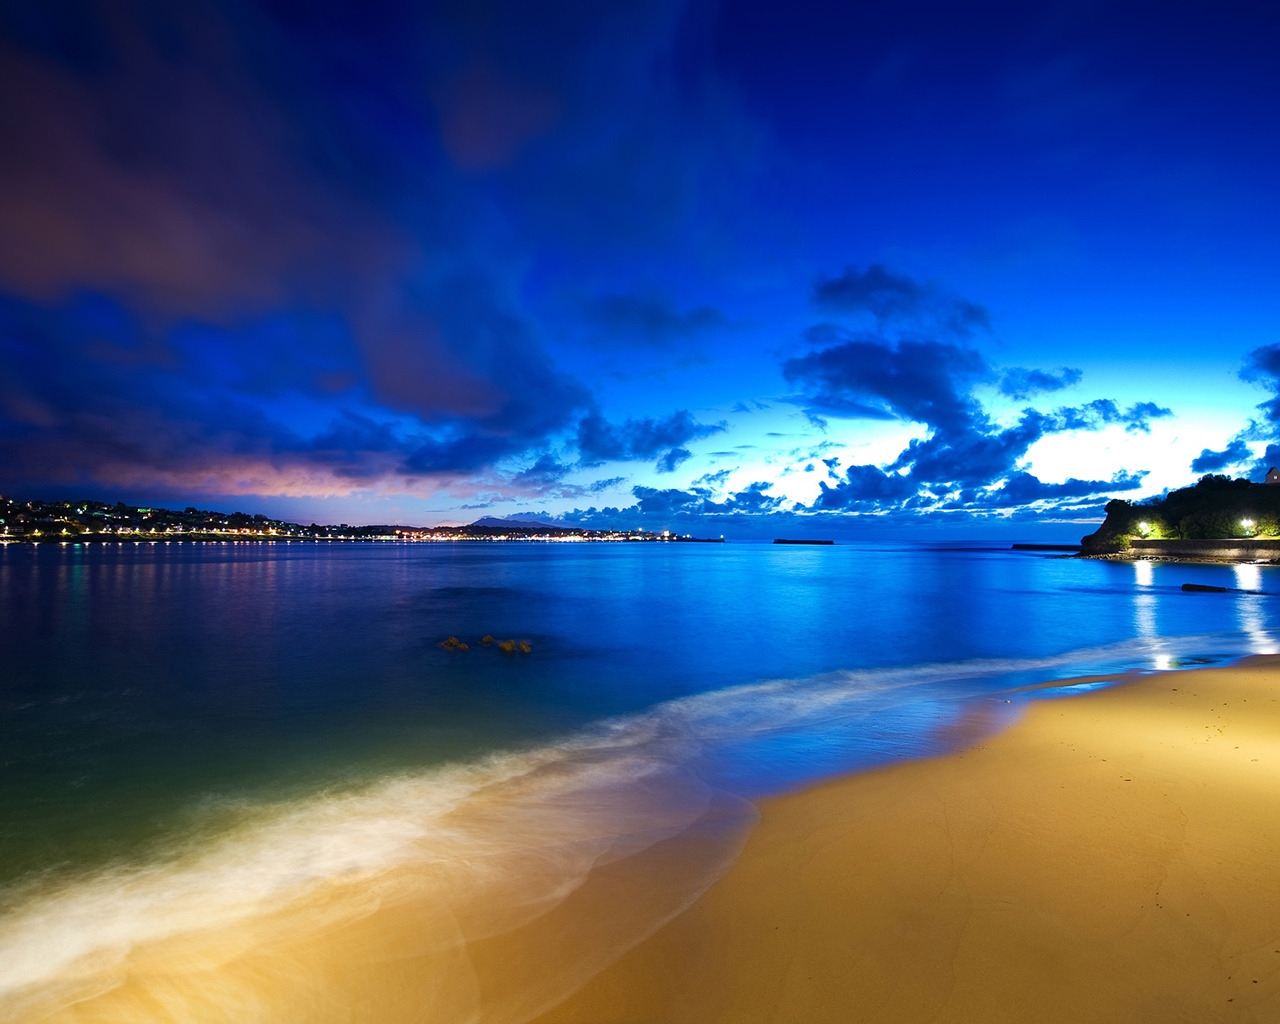 Luxury Beach for 1280 x 1024 resolution